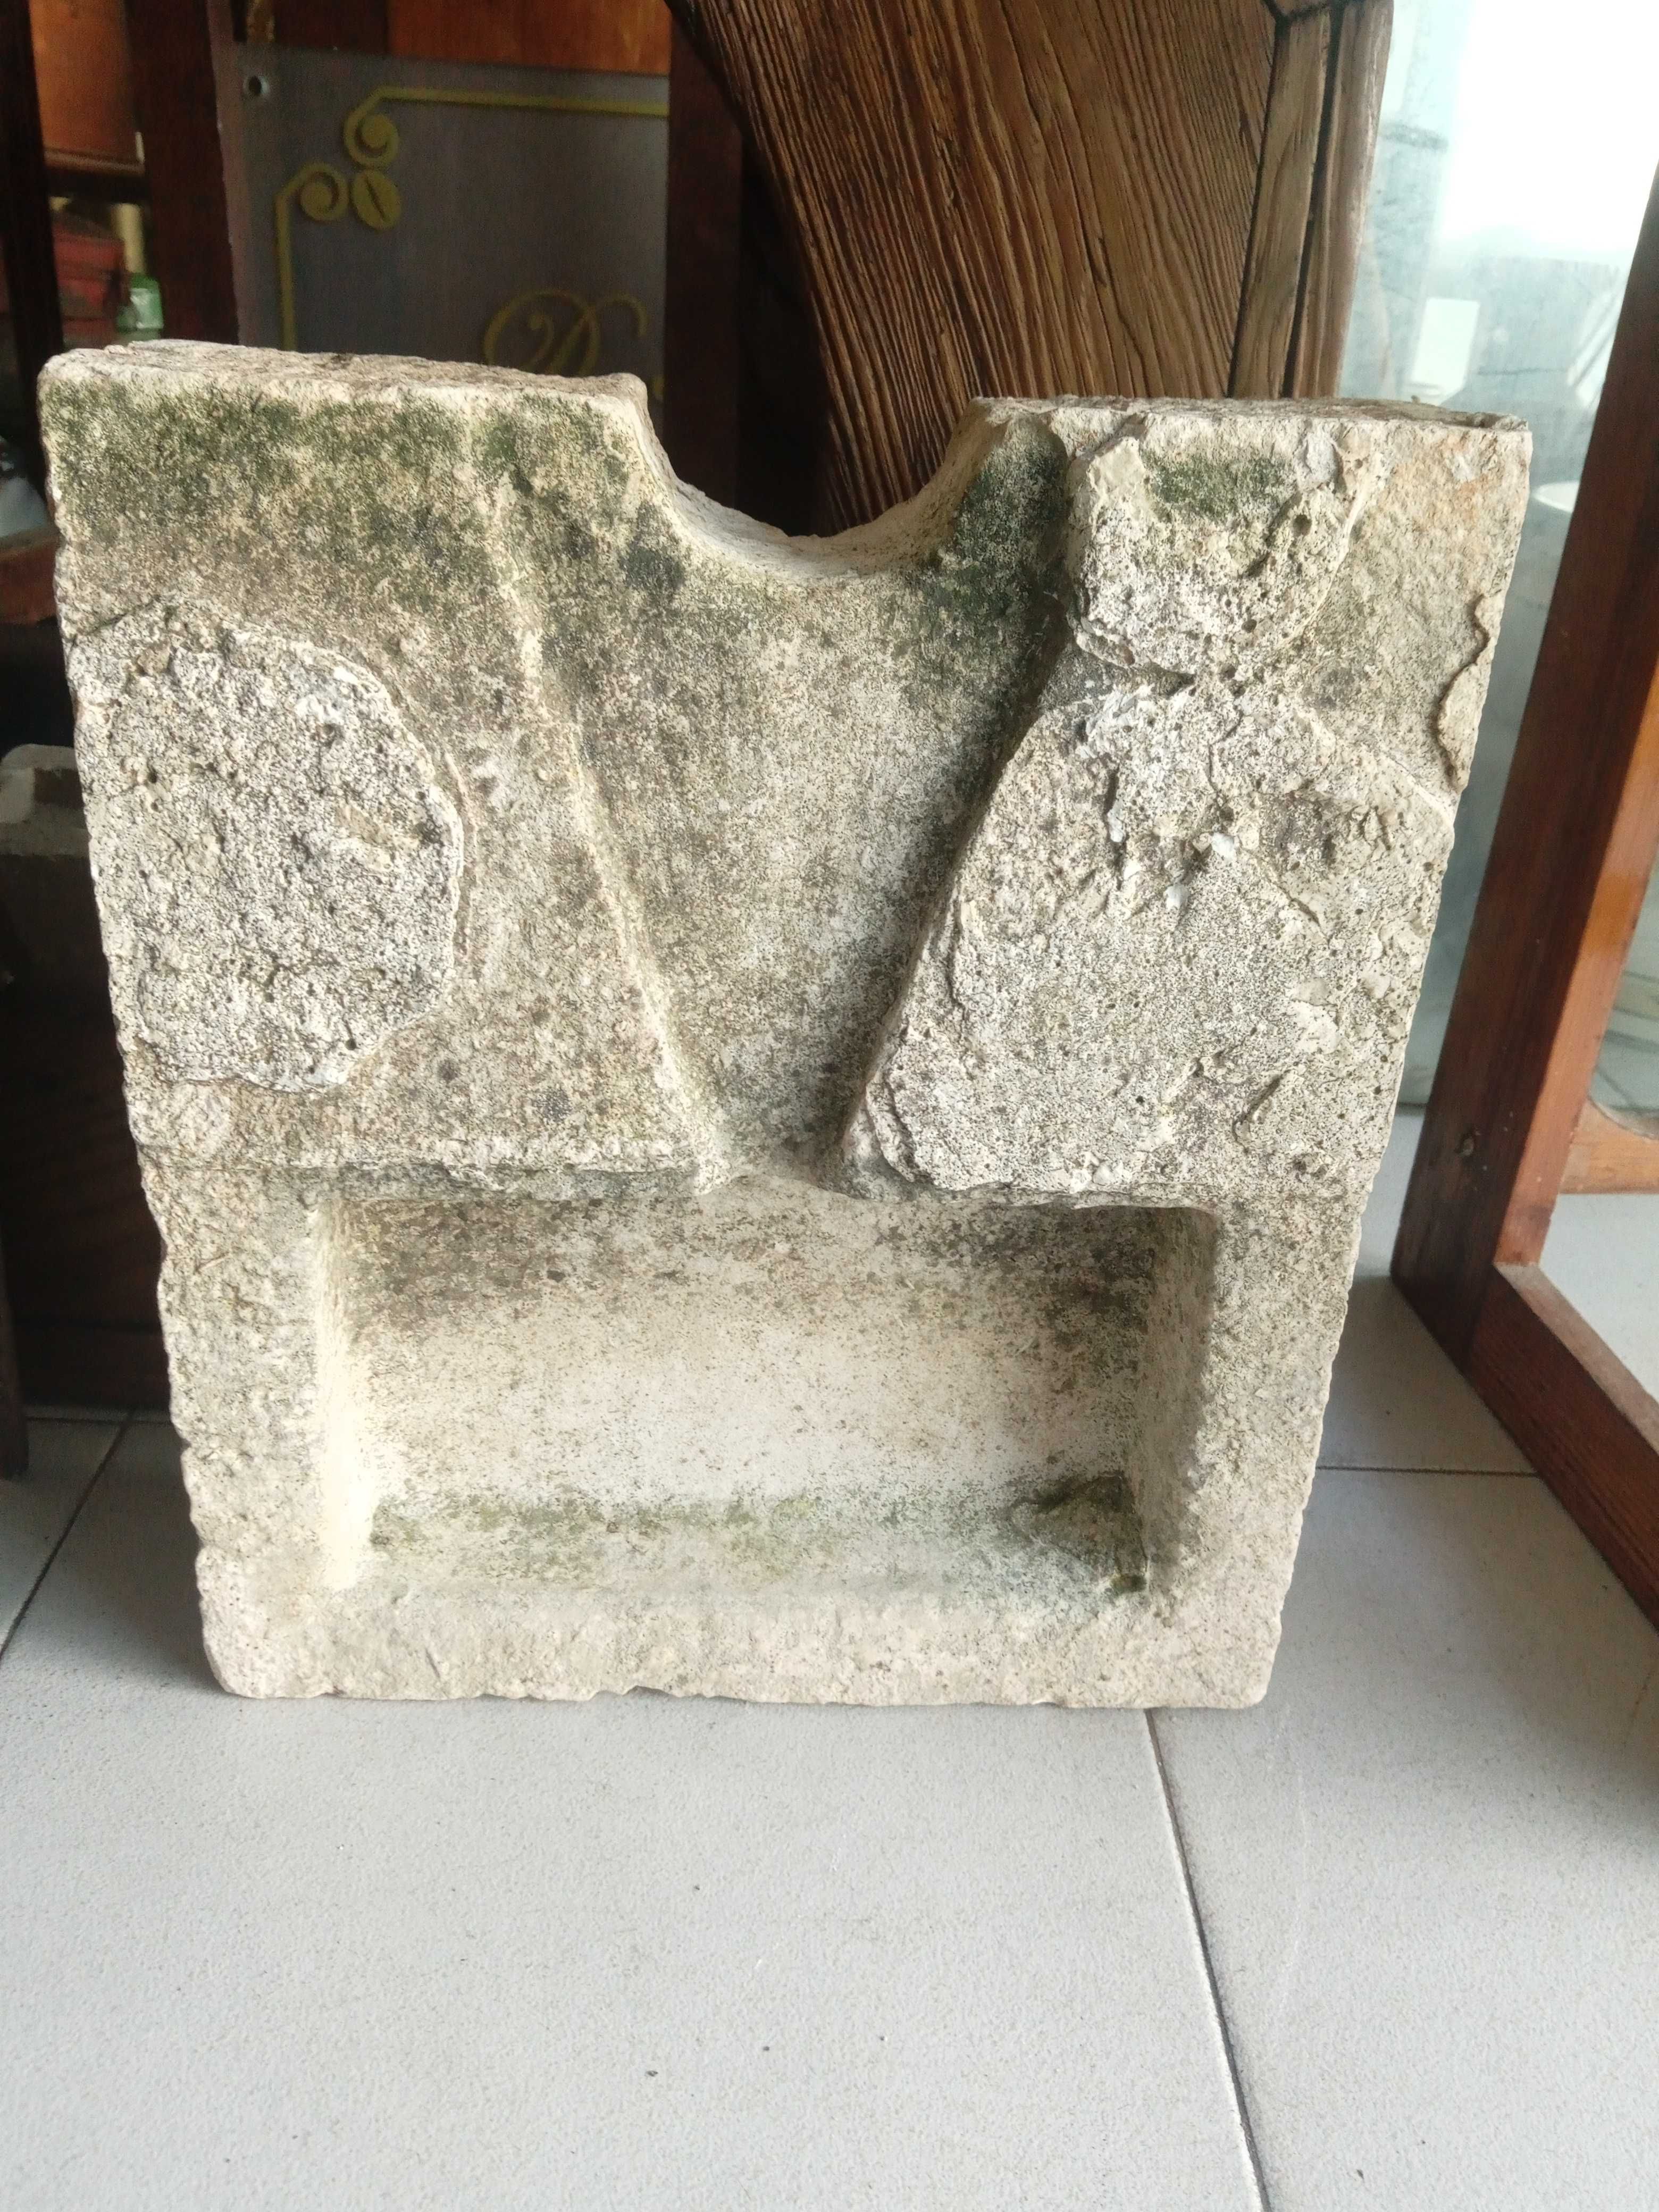 Pedra de chafariz, muito antiga